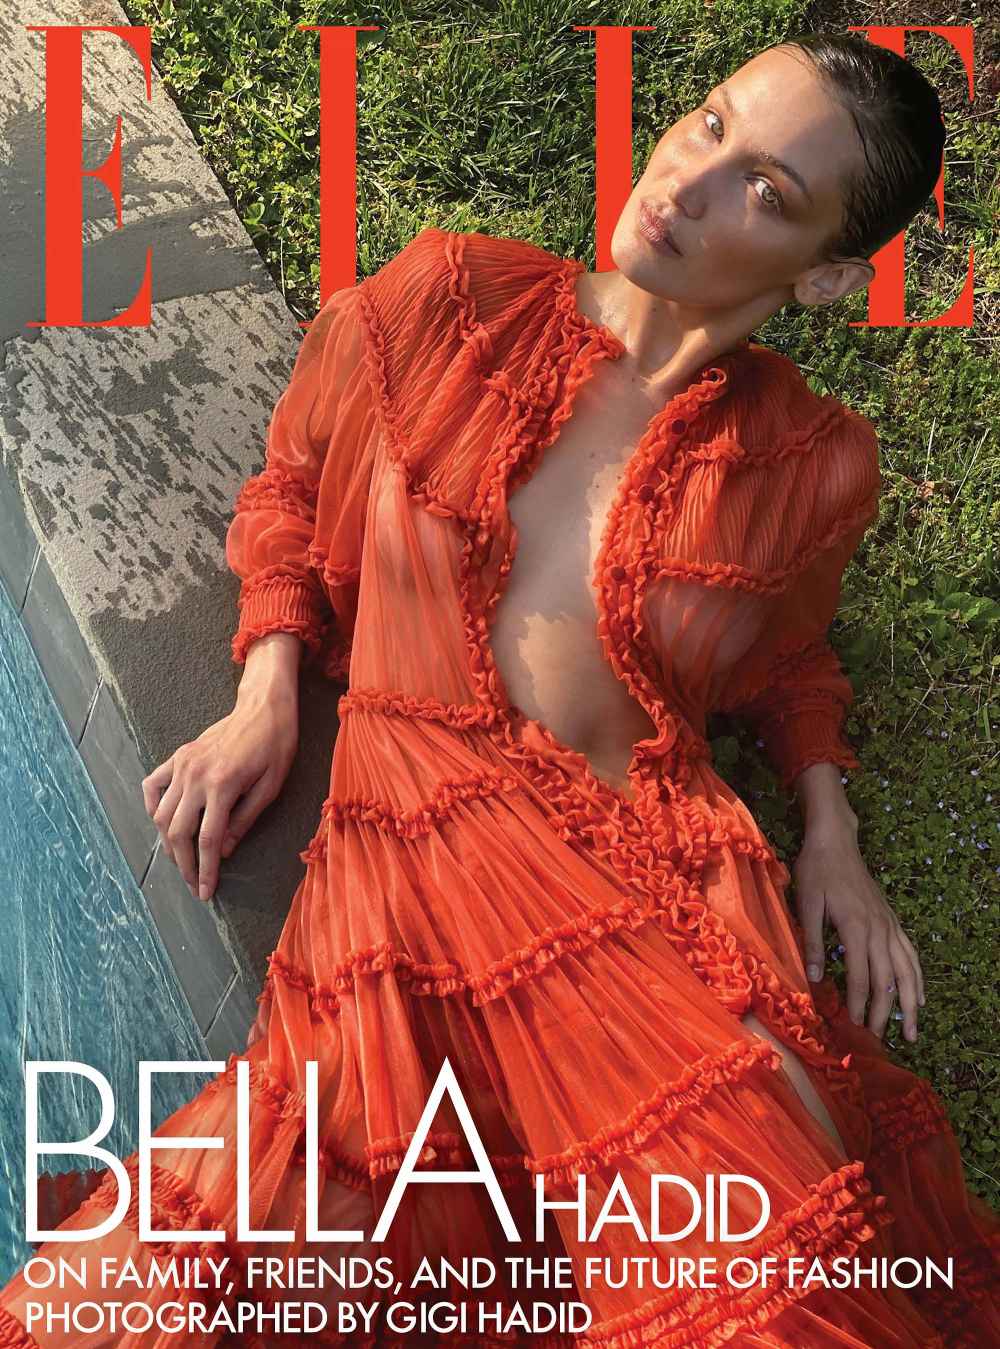 Pregnant Gigi Hadid Photographed Bella's August 'Elle' Magazine Cover